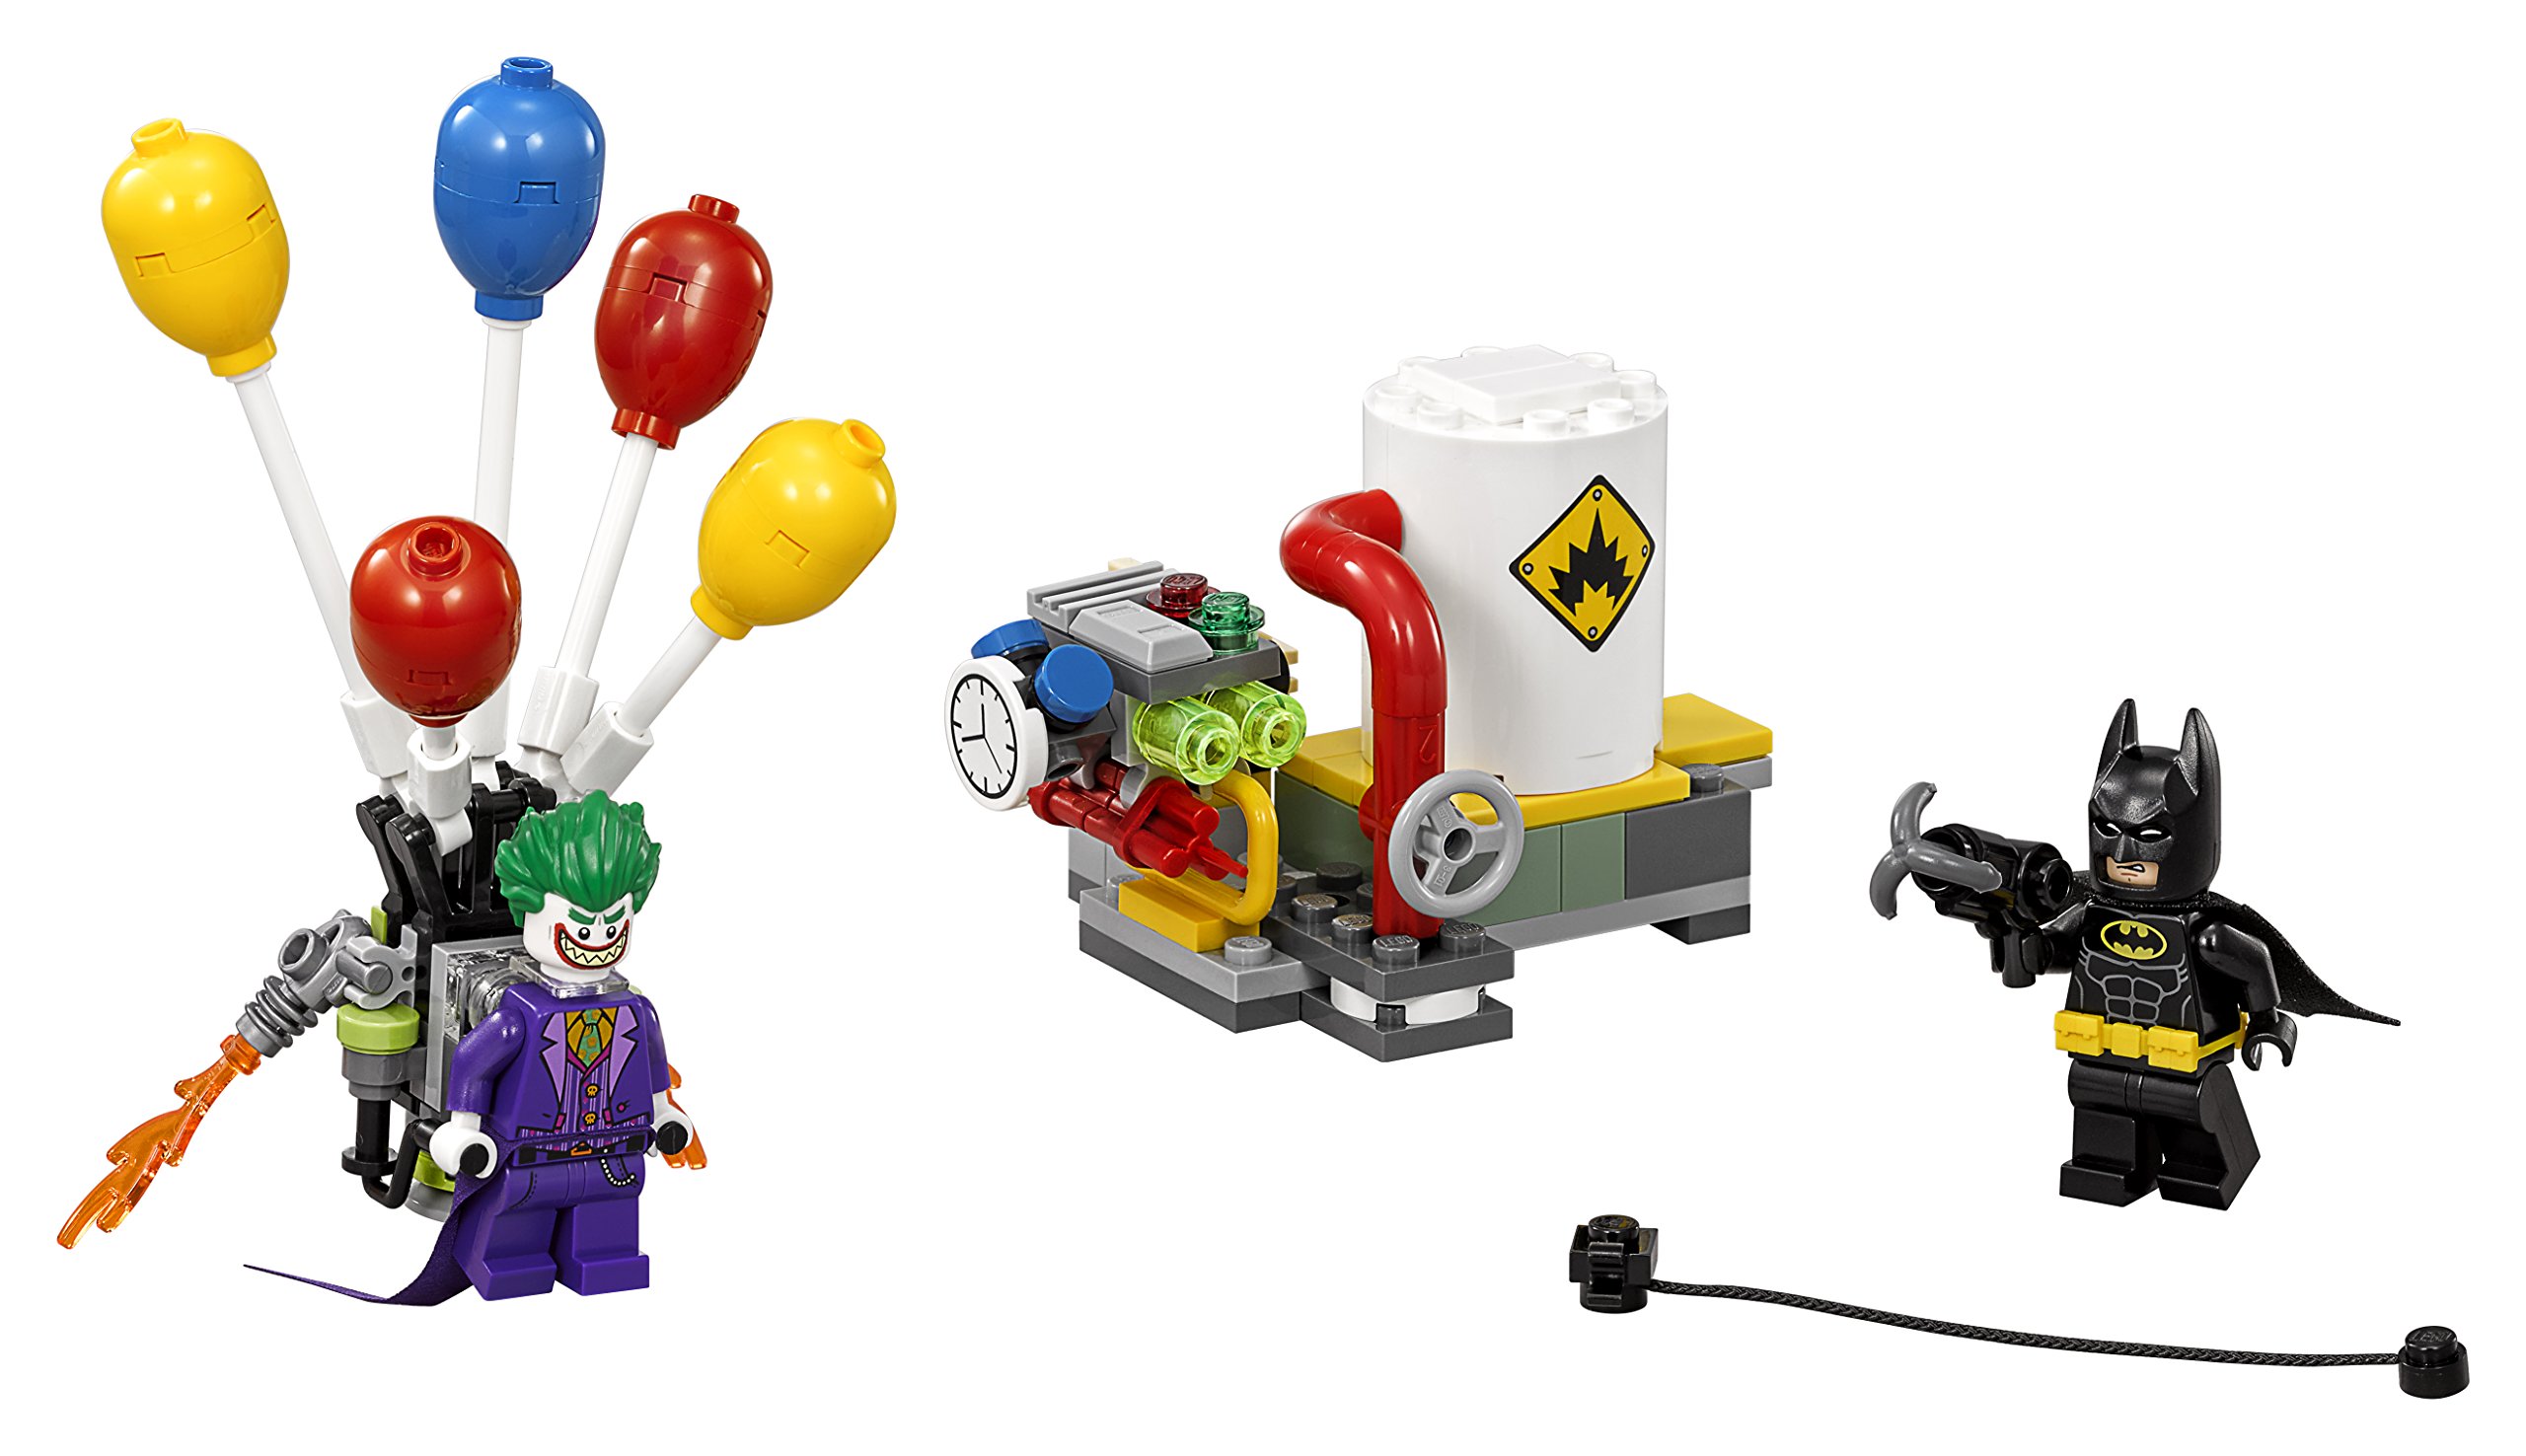 LEGO The Batman Movie The Joker Balloon Escape 70900 Batman Toy